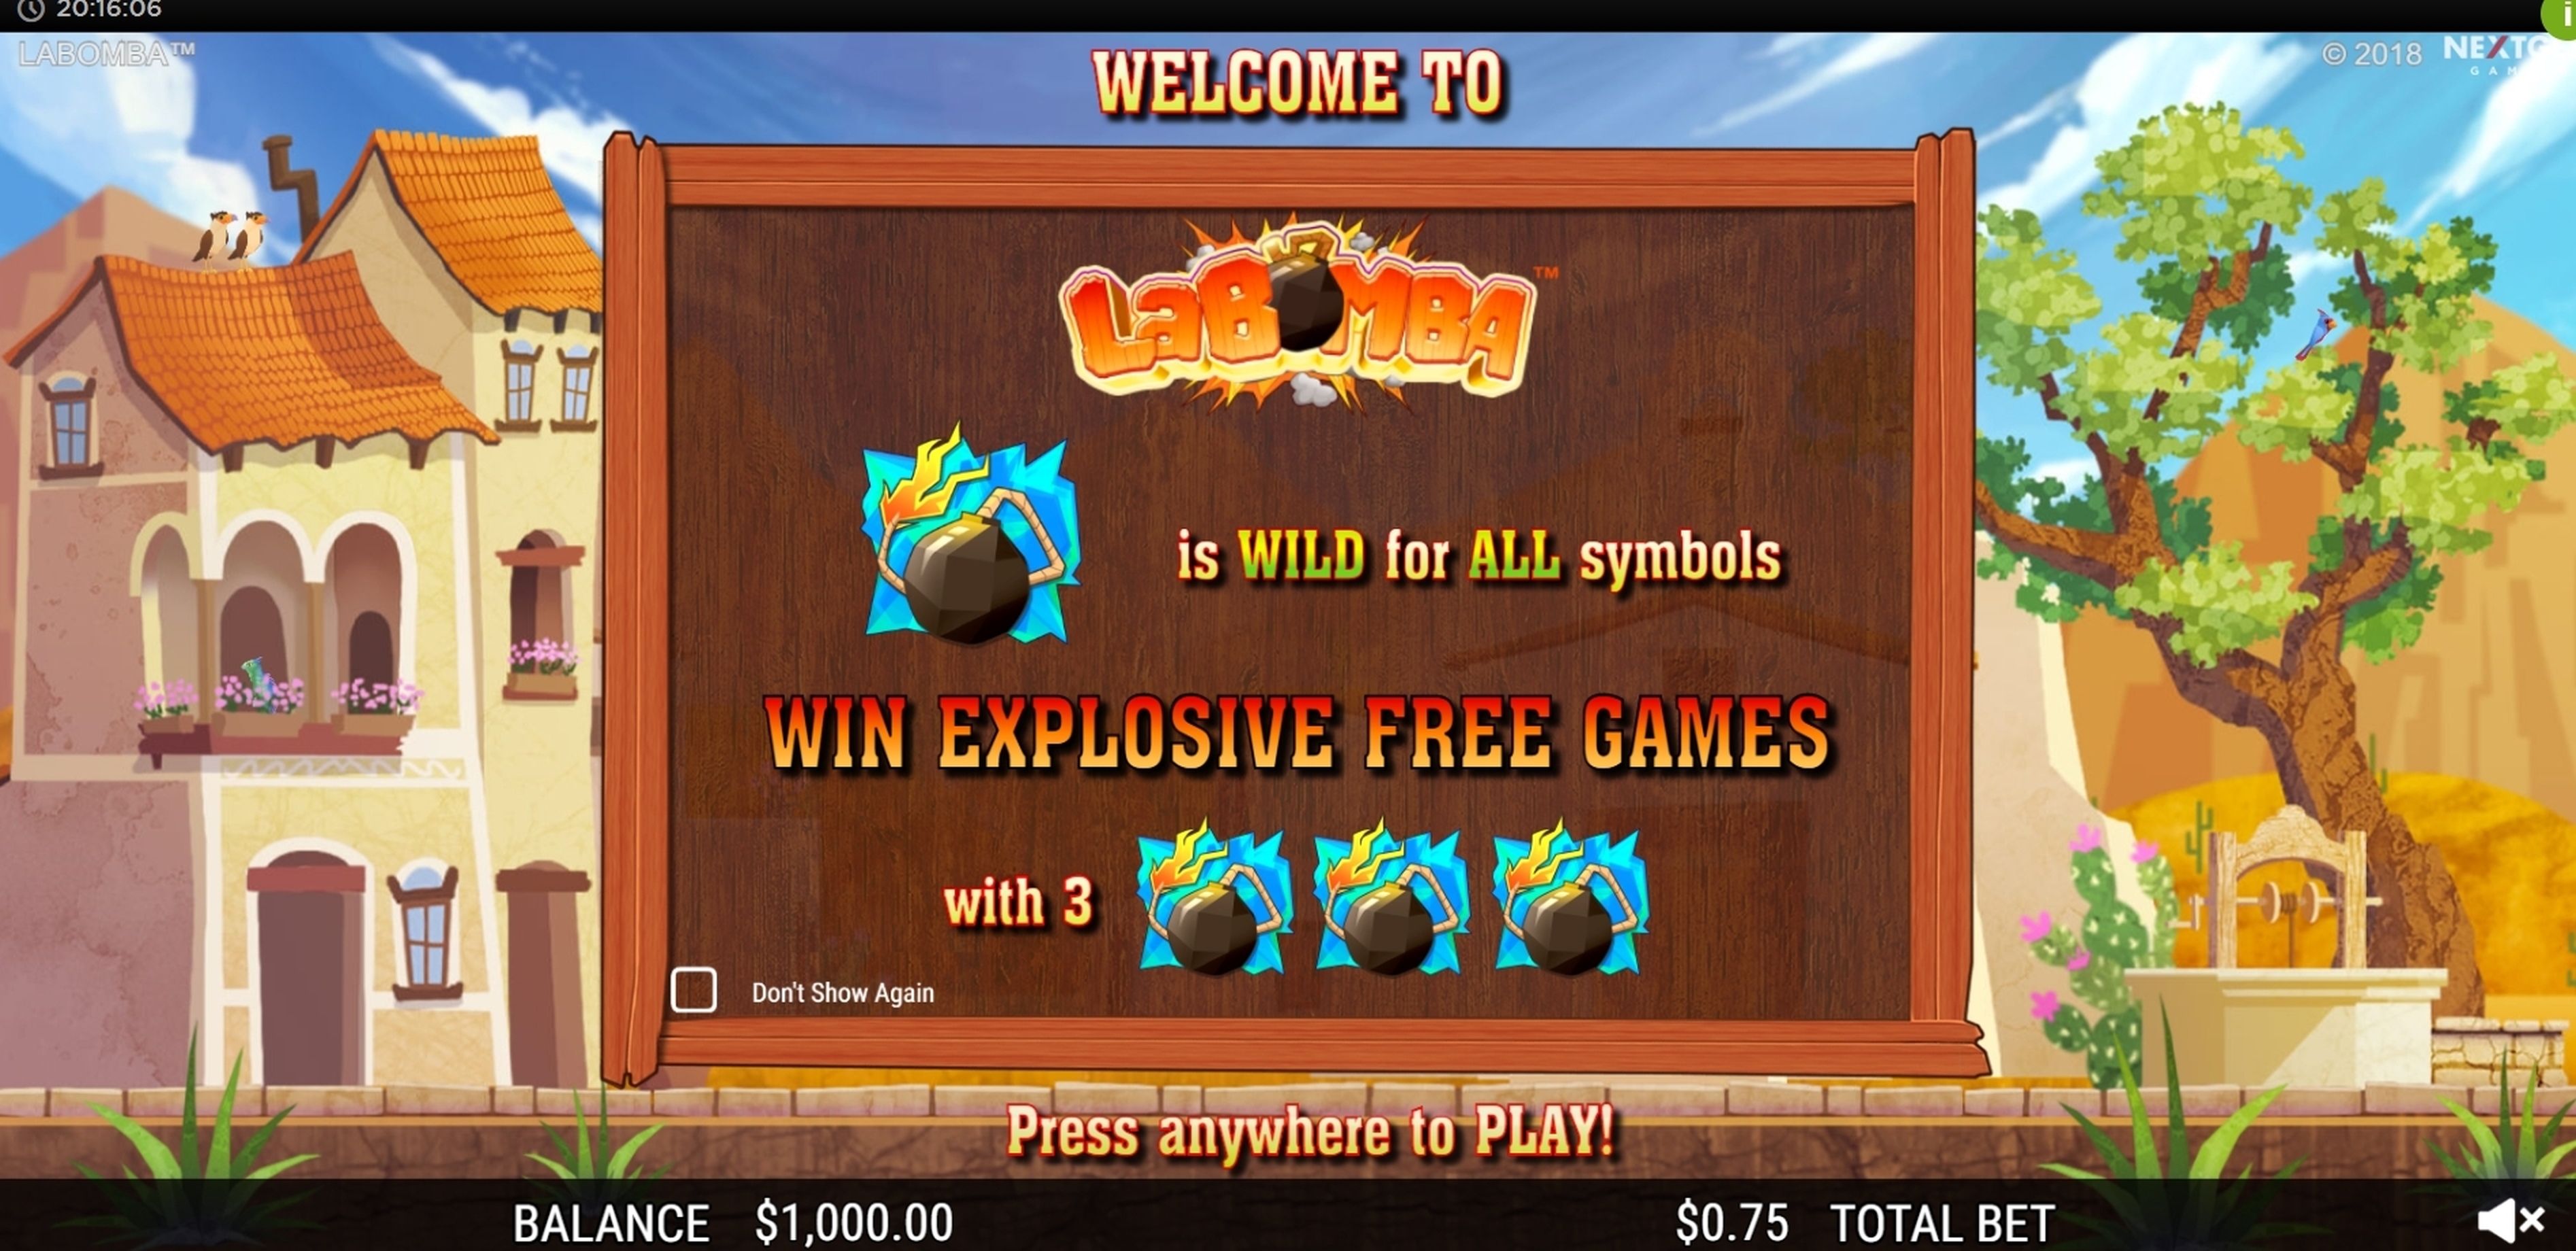 Play La Bomba Free Casino Slot Game by Side City Studios